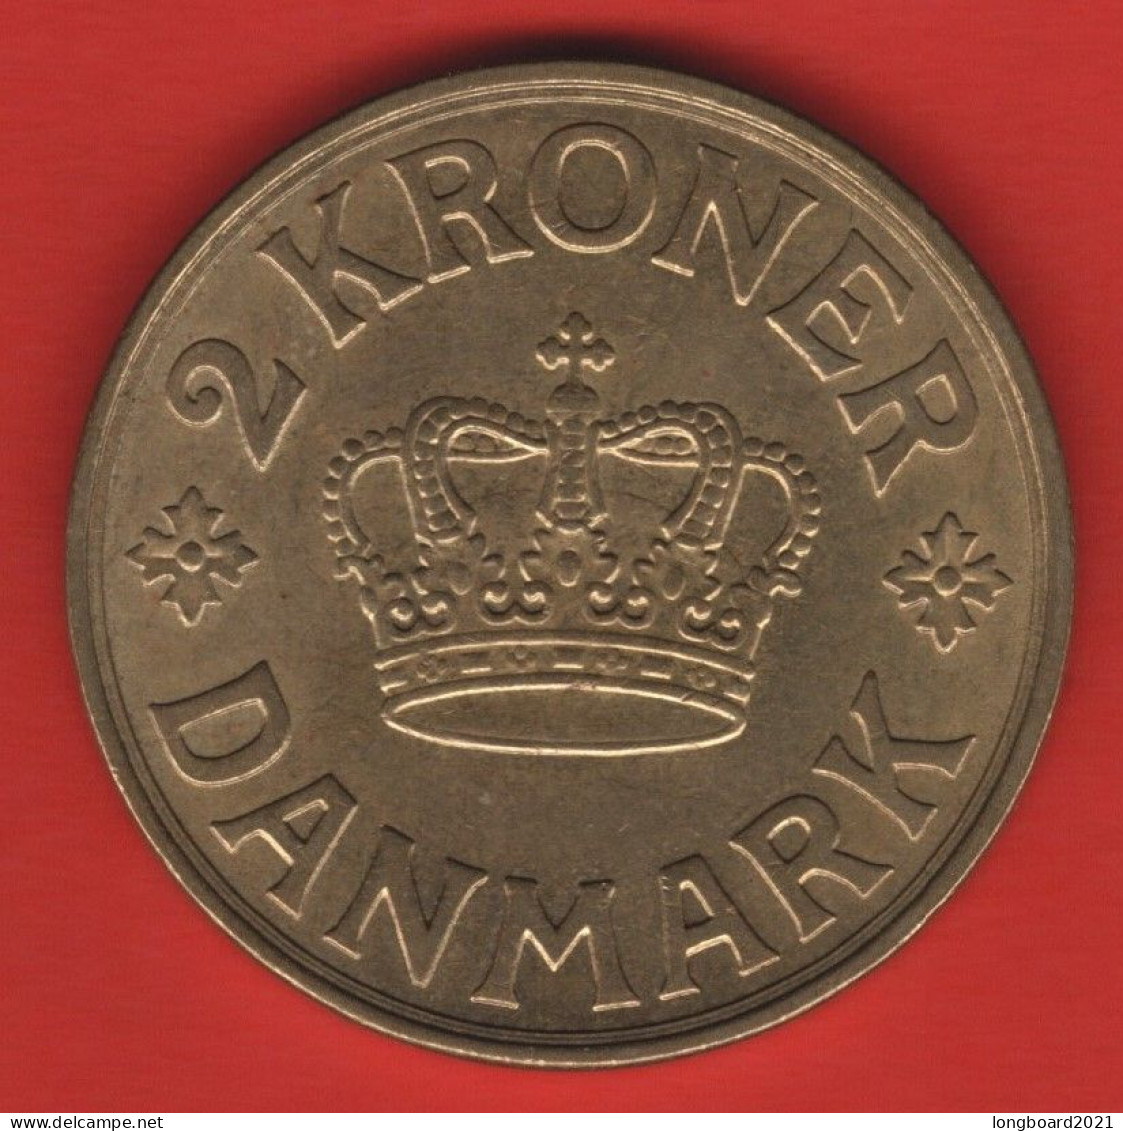 DENMARK - 2 KRONER 1939 - NEARLY UNCIRCULATED - Dänemark